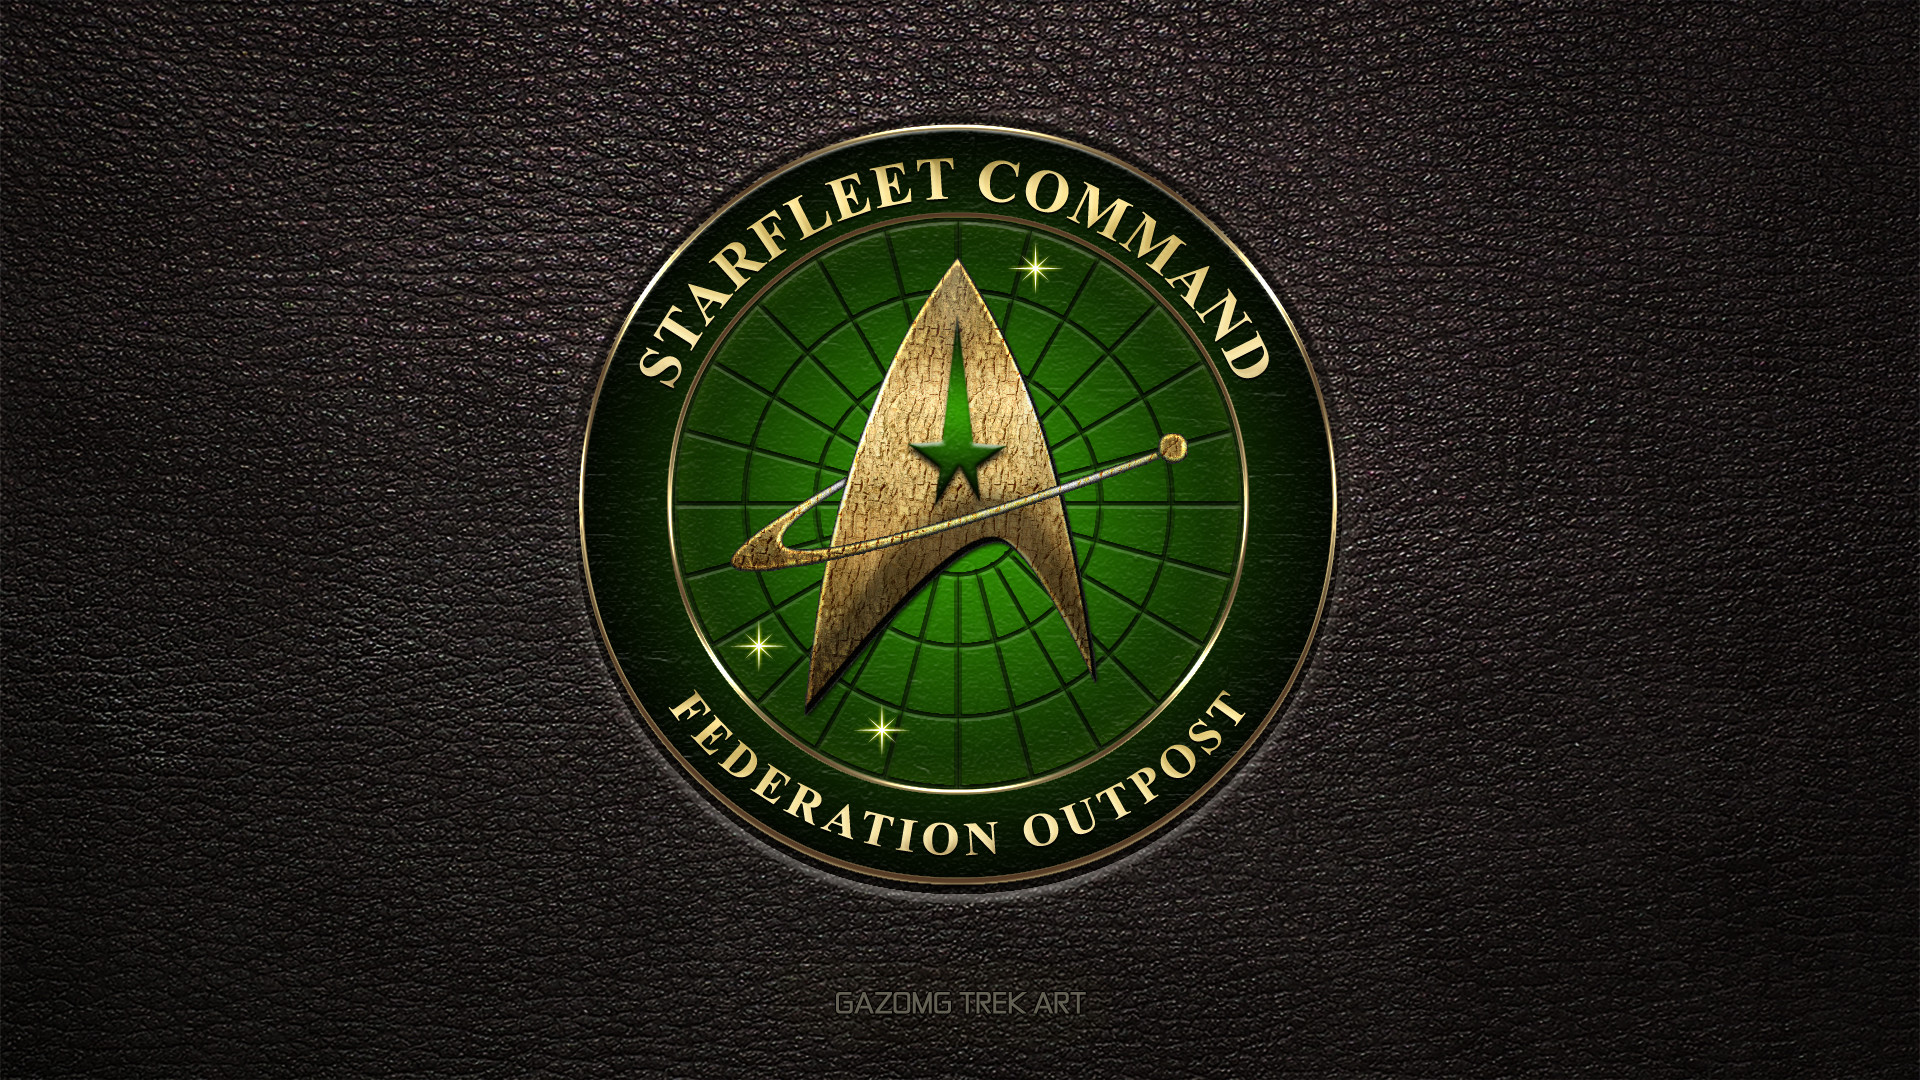 1920x1080 ... Starfleet Federation Outpost Logo 2370s (updated) by gazomg